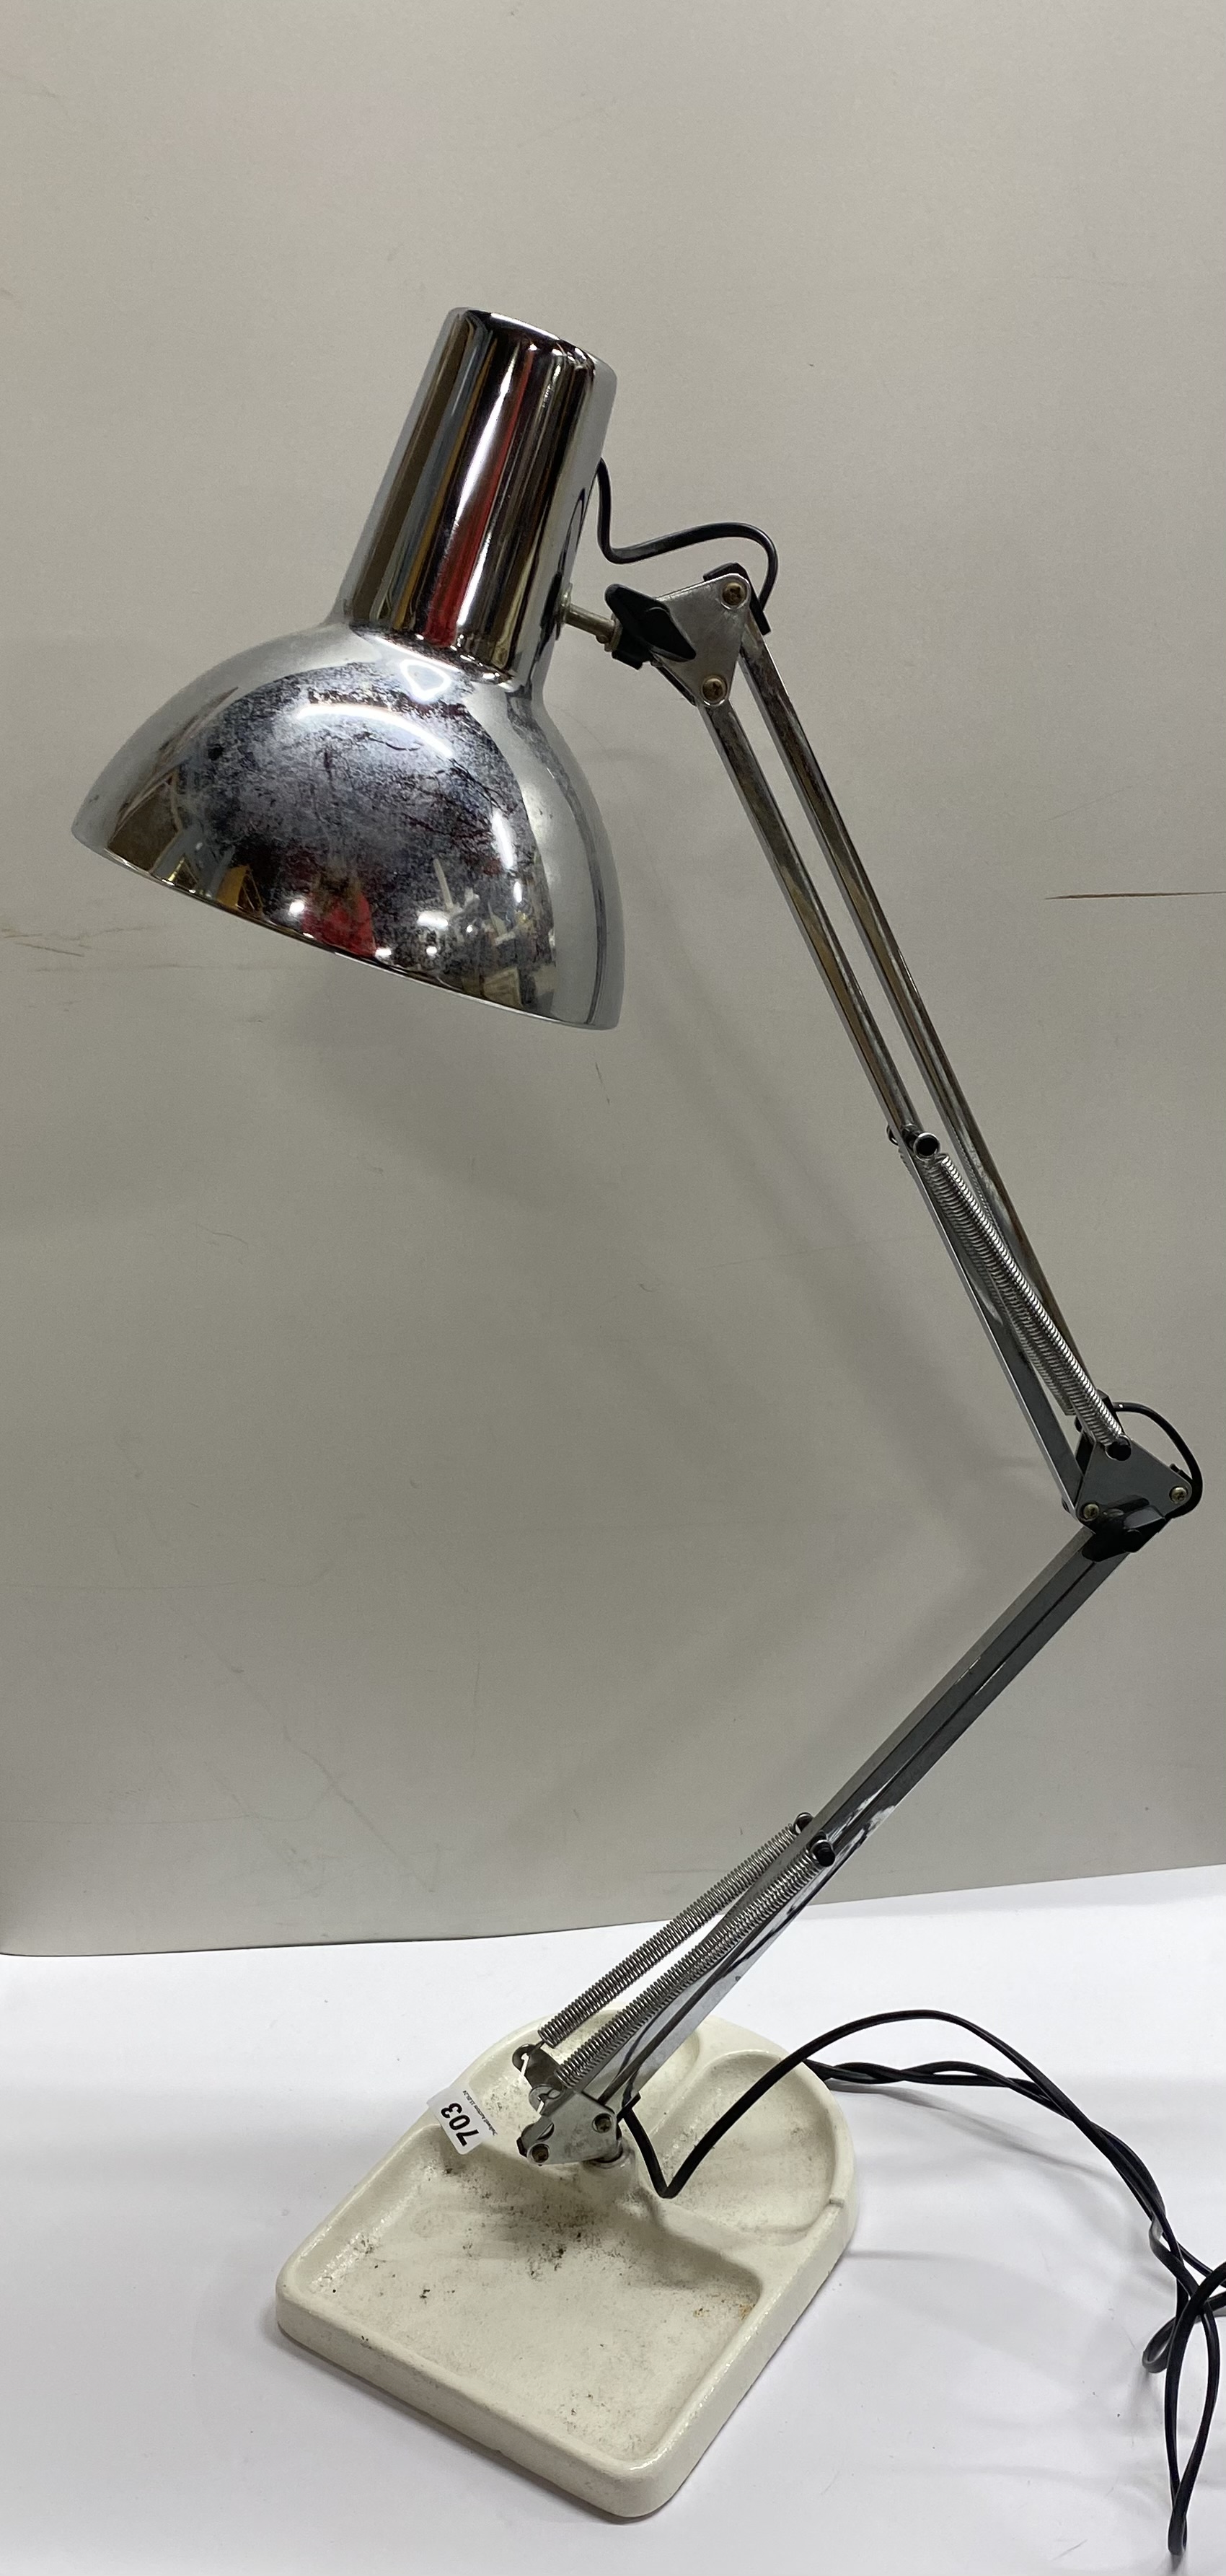 A vintage Ikea angle desk lamp.